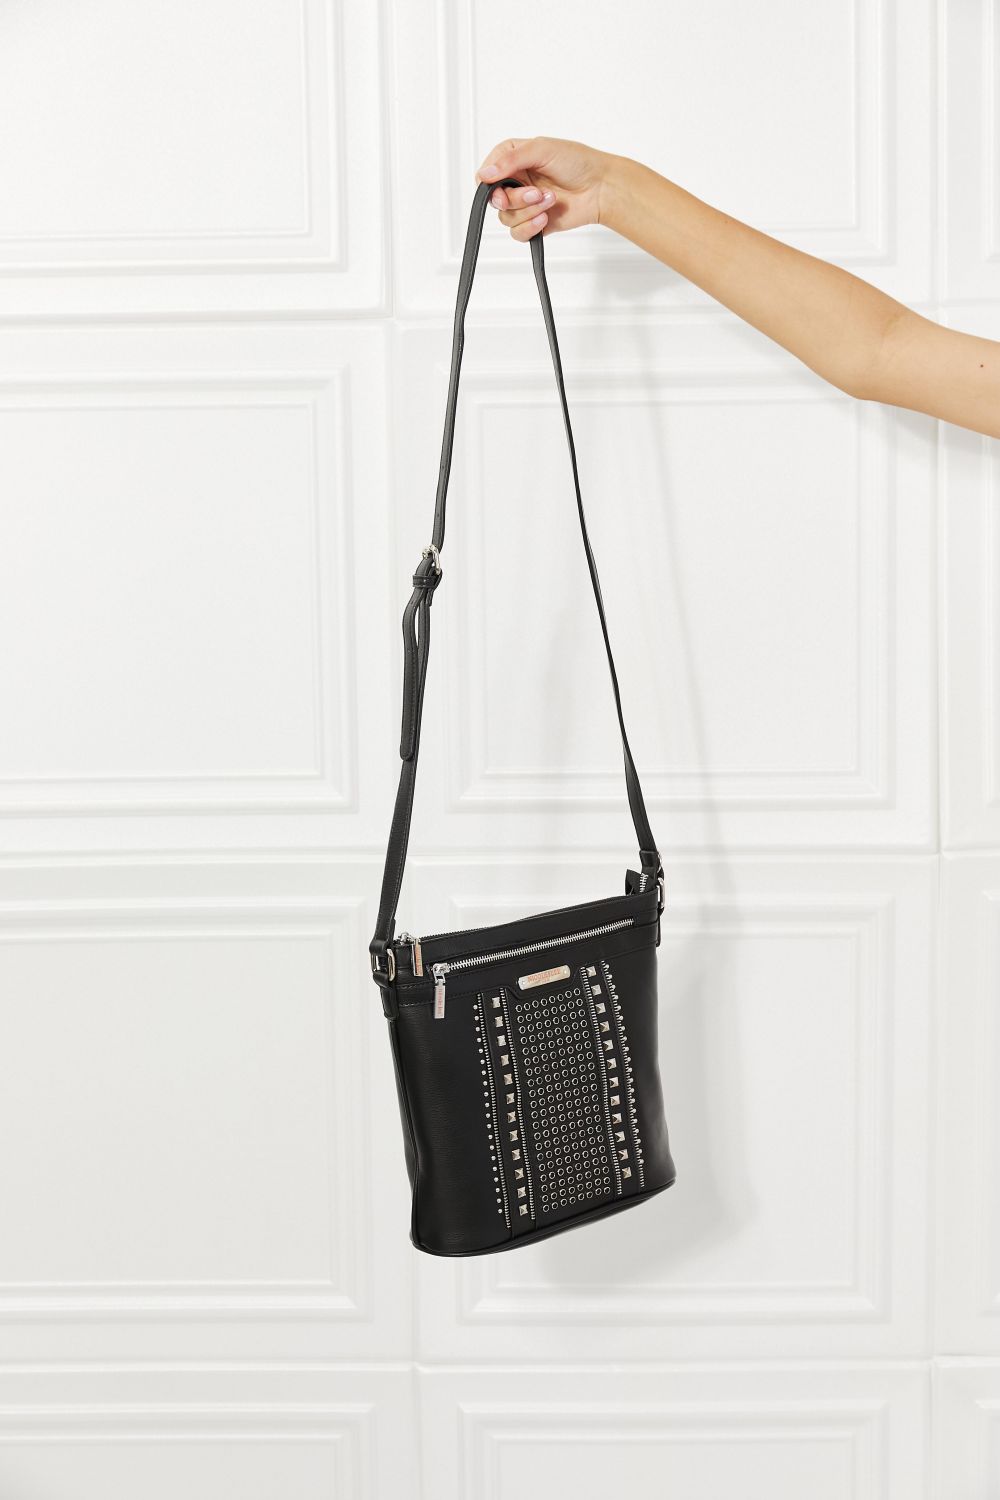 Beige Nicole Lee USA Love Handbag Sentient Beauty Fashions Bag